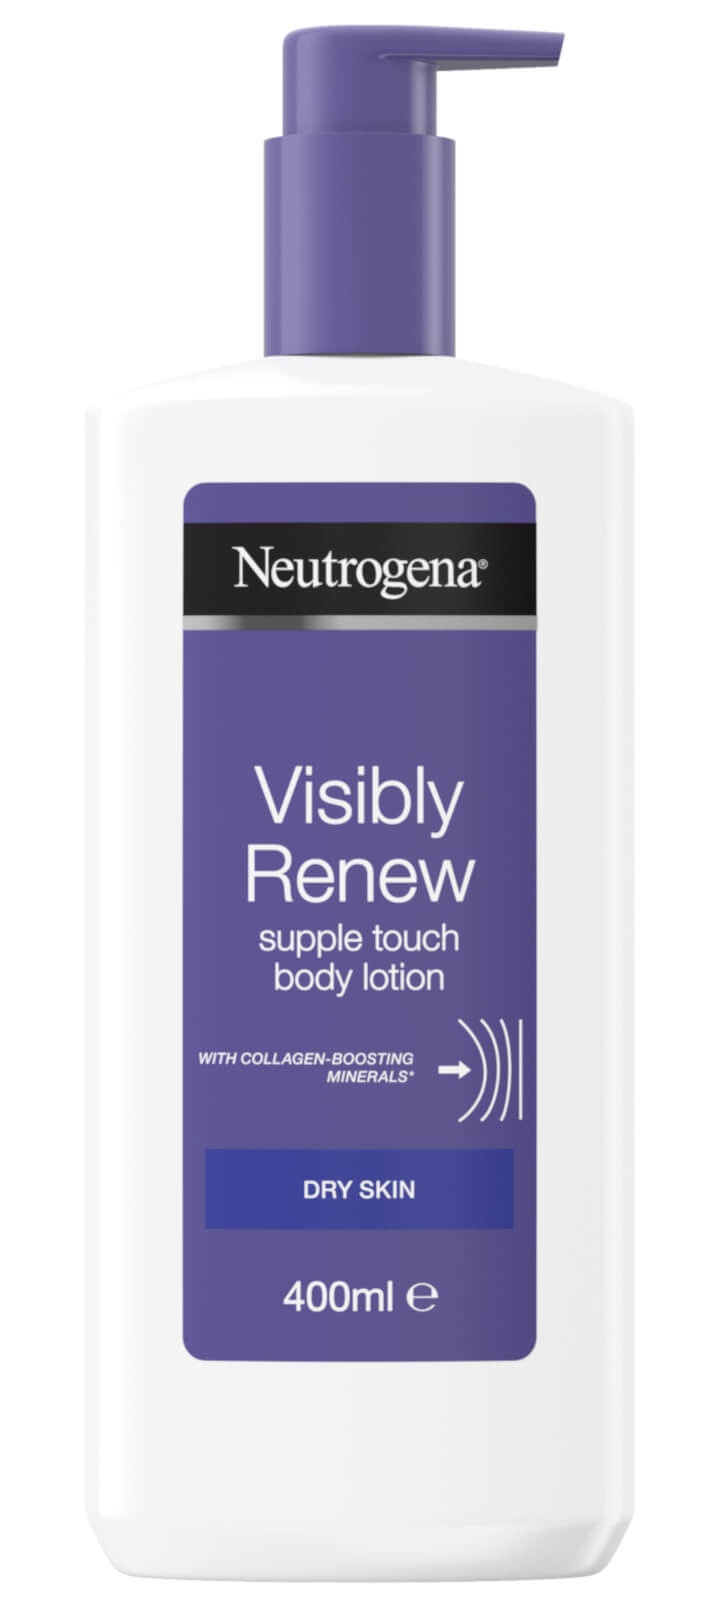 Neutrogena Visibly Renew Body Lotion